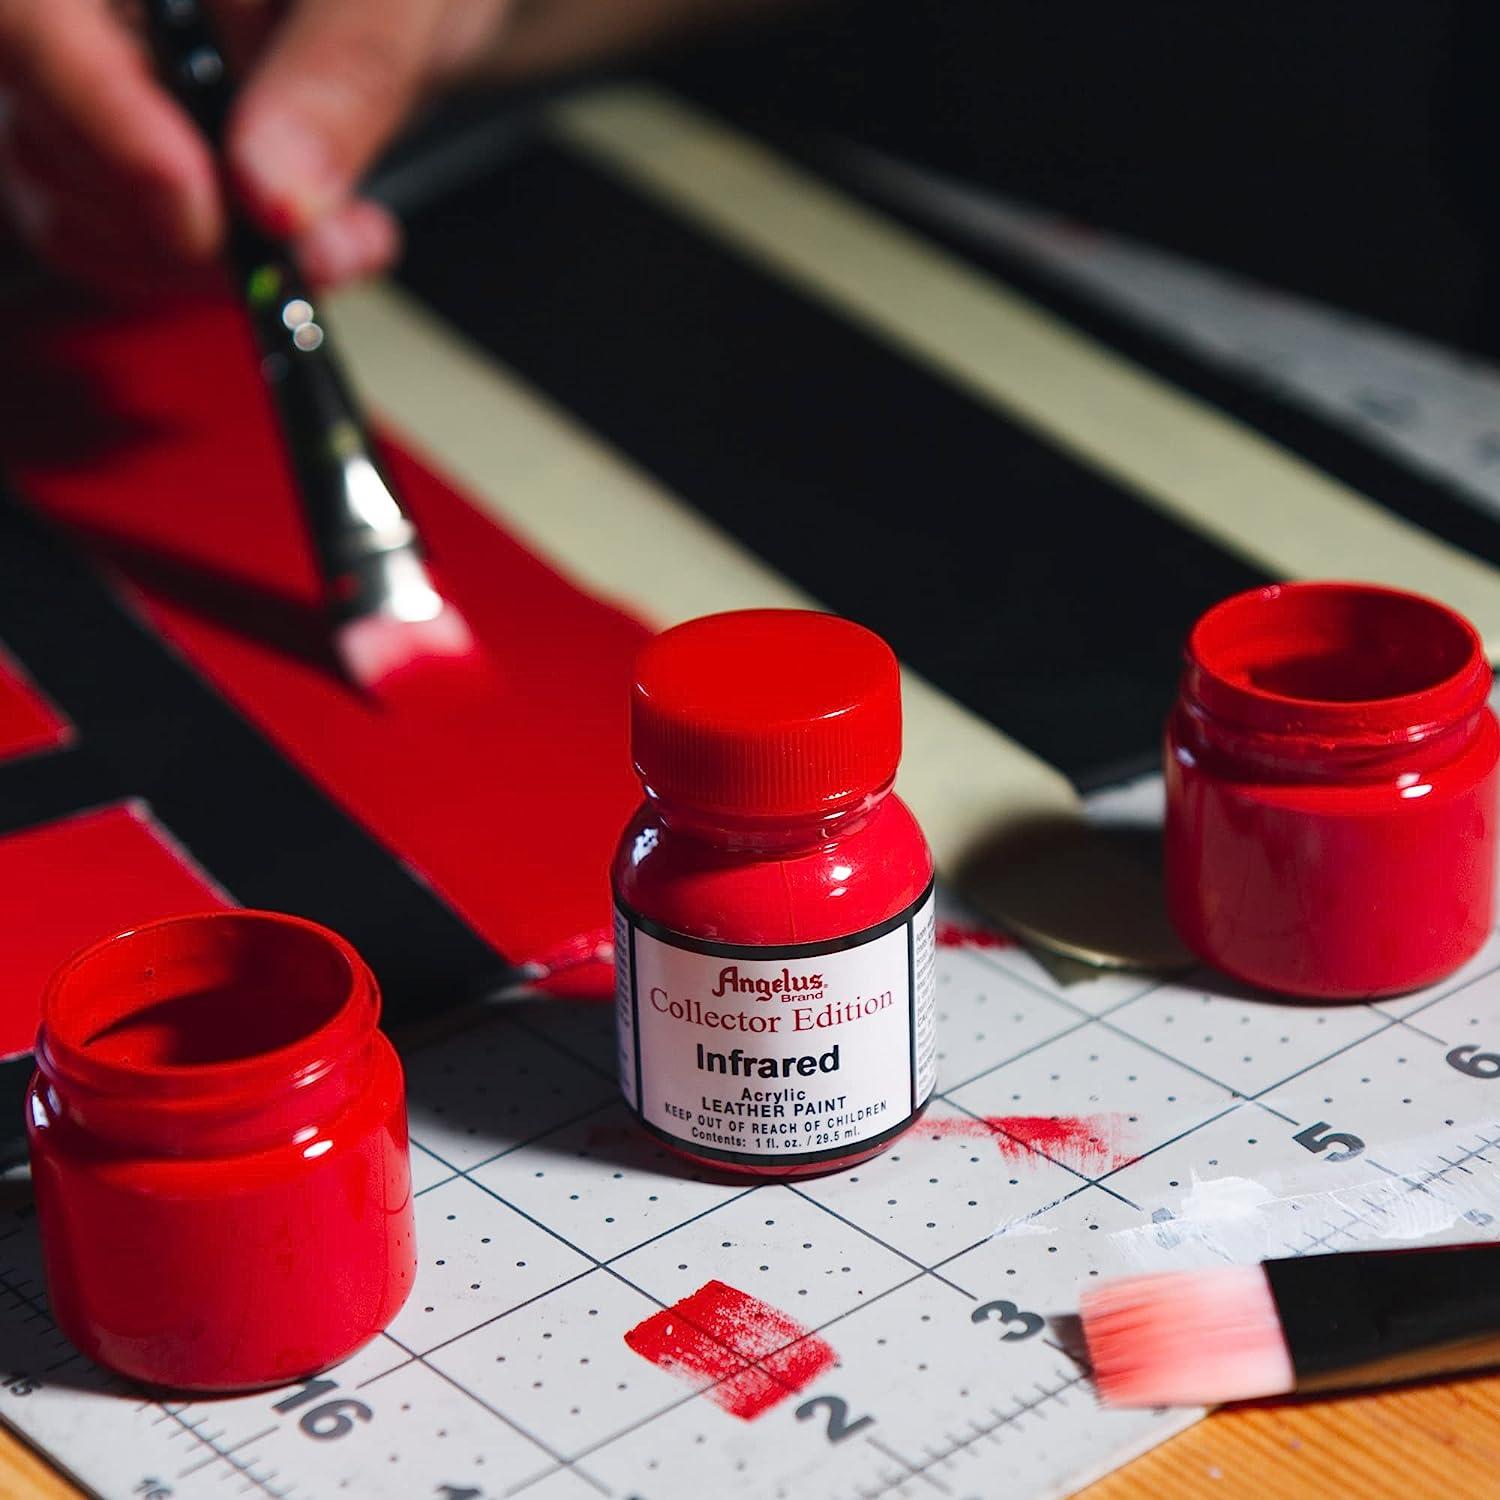  Angelus Leather Paint Starter Kit Set of 12 1 Ounce Bottles